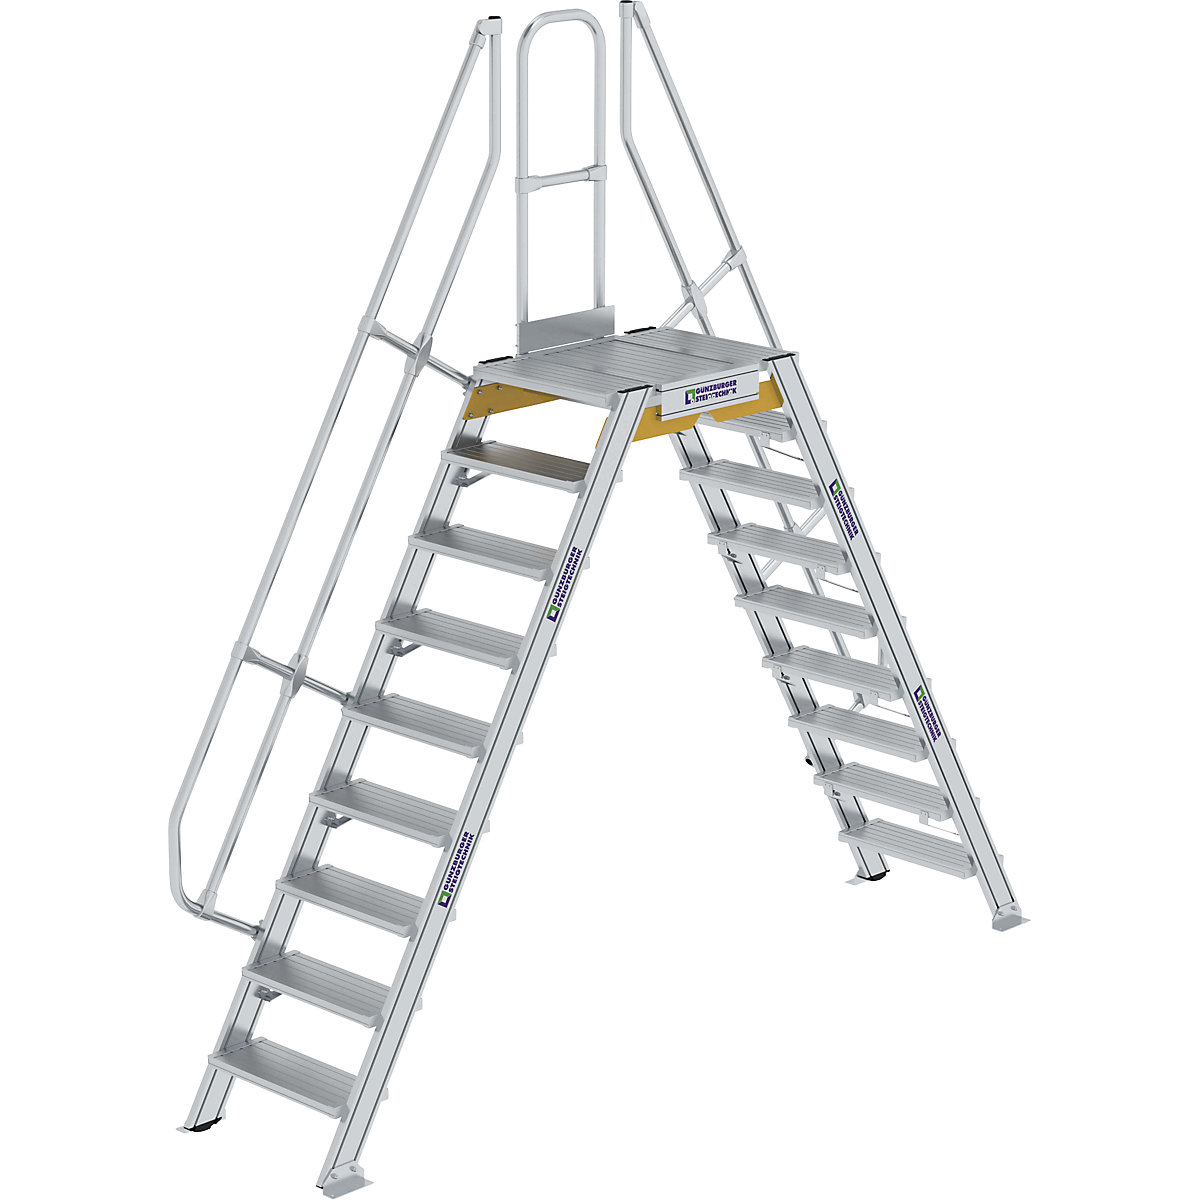 Premostitvena lestev – MUNK, skupna nosilnost 300 kg, 9 stopnic, podest 800 x 600 mm